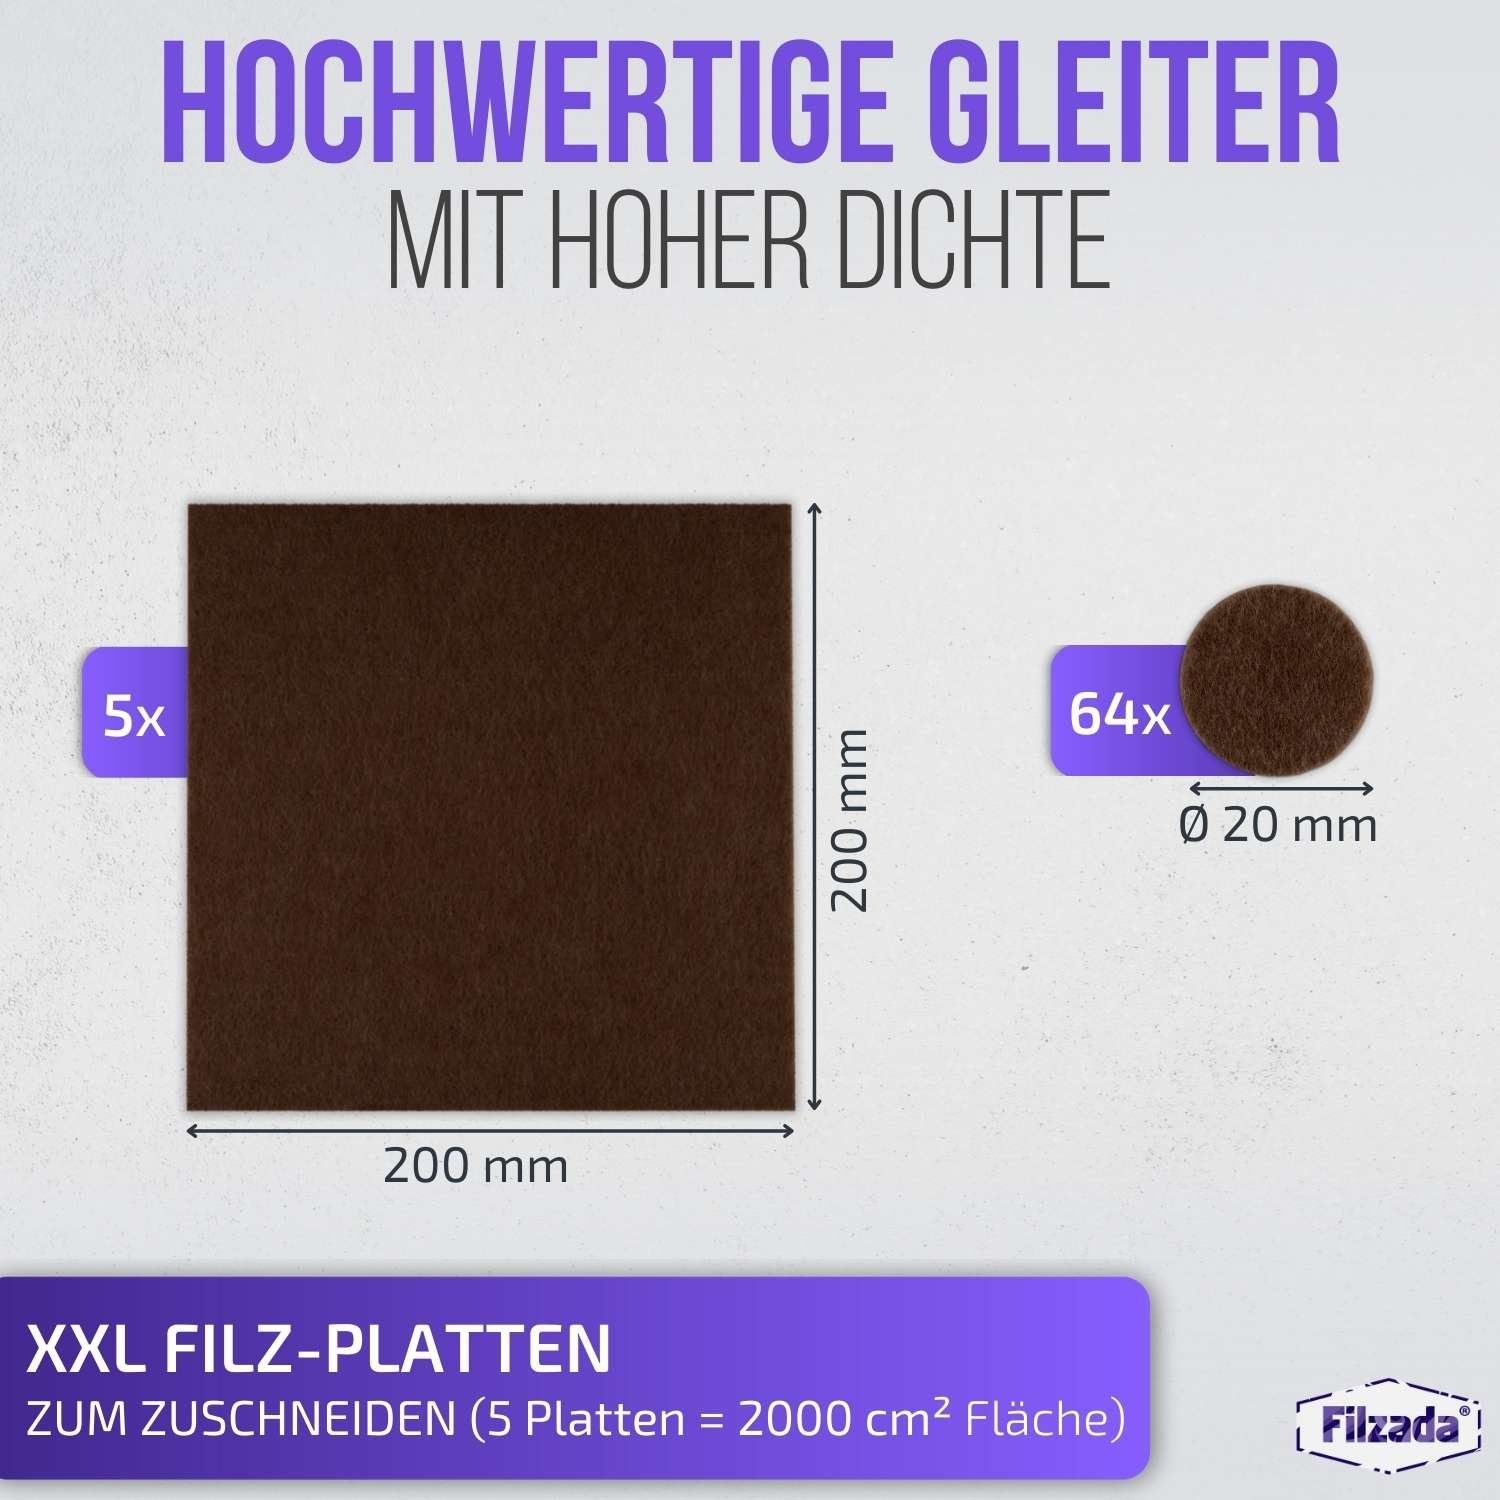 Filzada Filzgleiter Filzgleiter Selbstklebend Möbelgleiter Ø20mm 200x200mm Platten Set & Braun